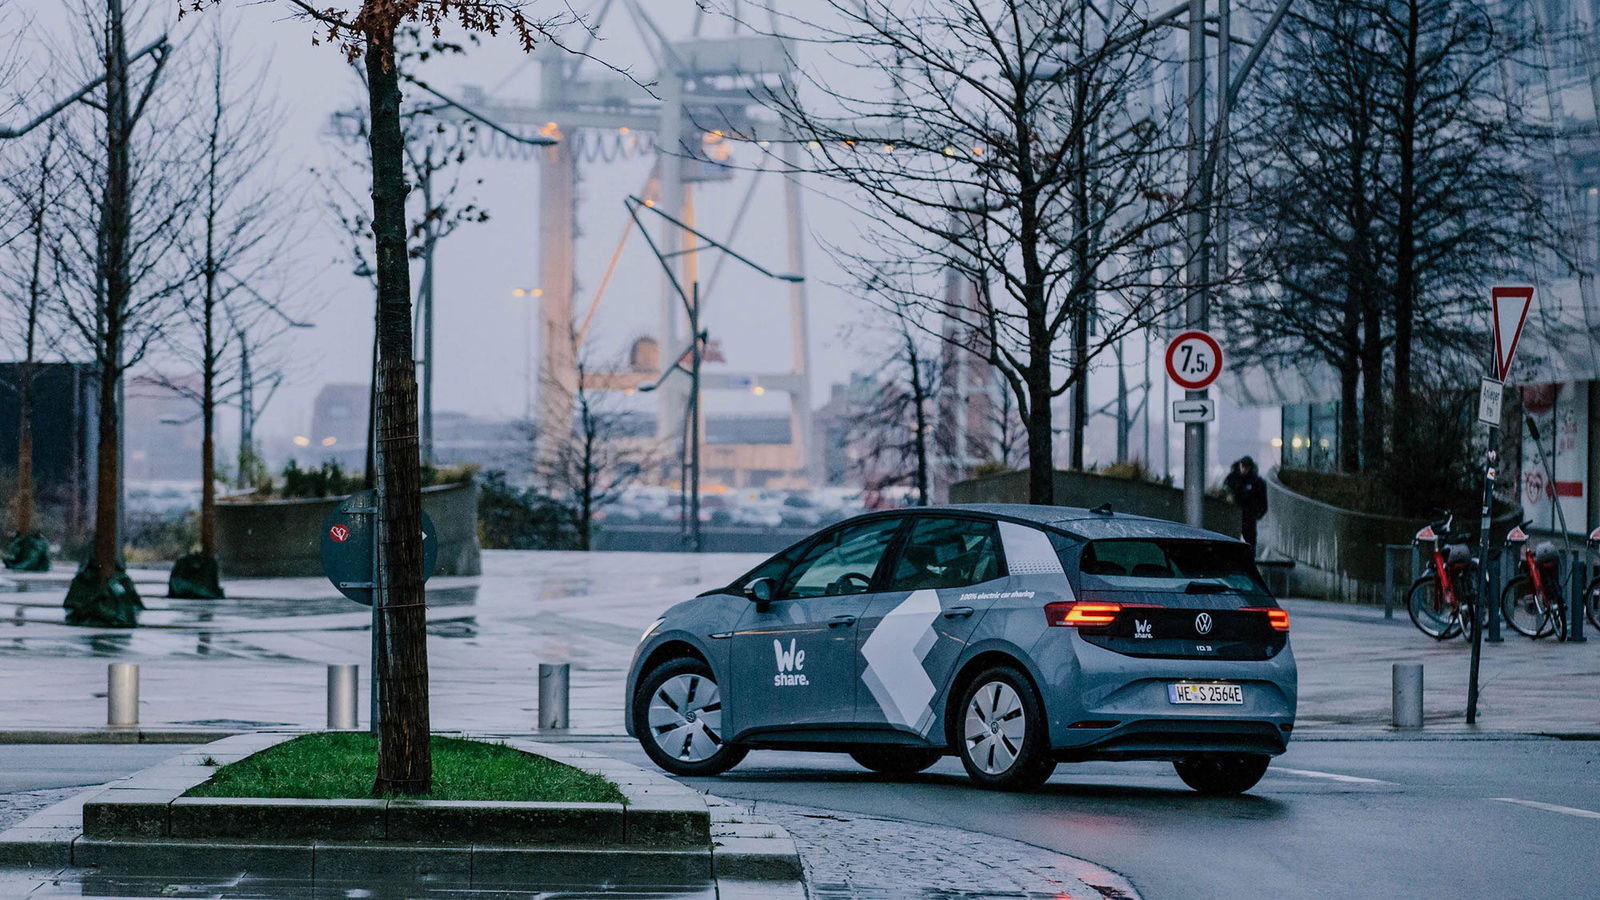 Story "Volkswagen begins electric car sharing in Hamburg "